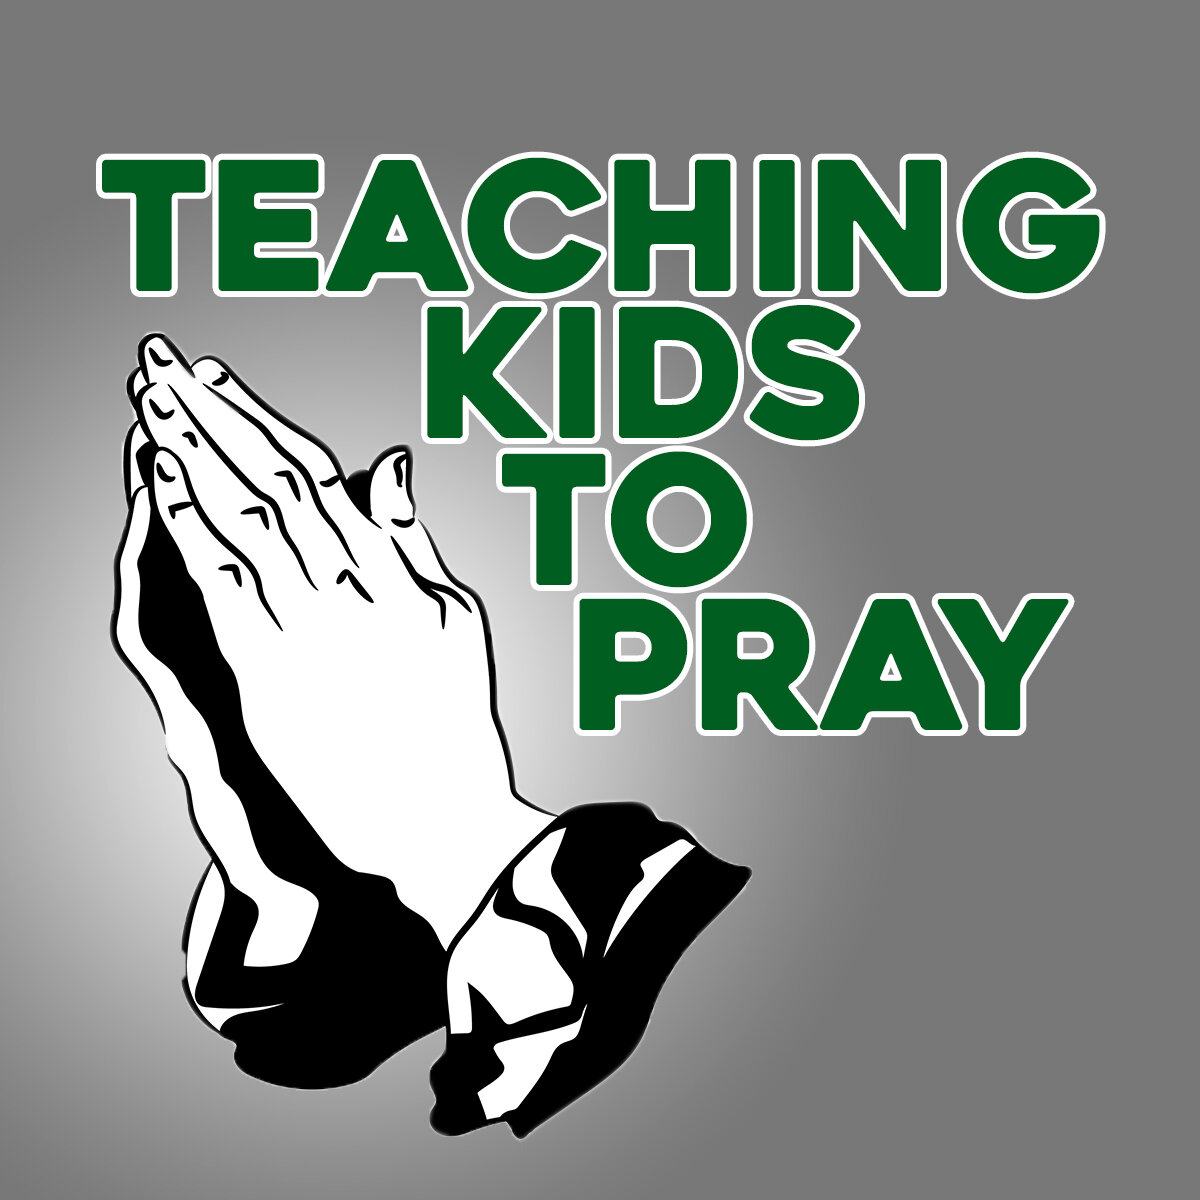 Teaching kids to pray.jpg